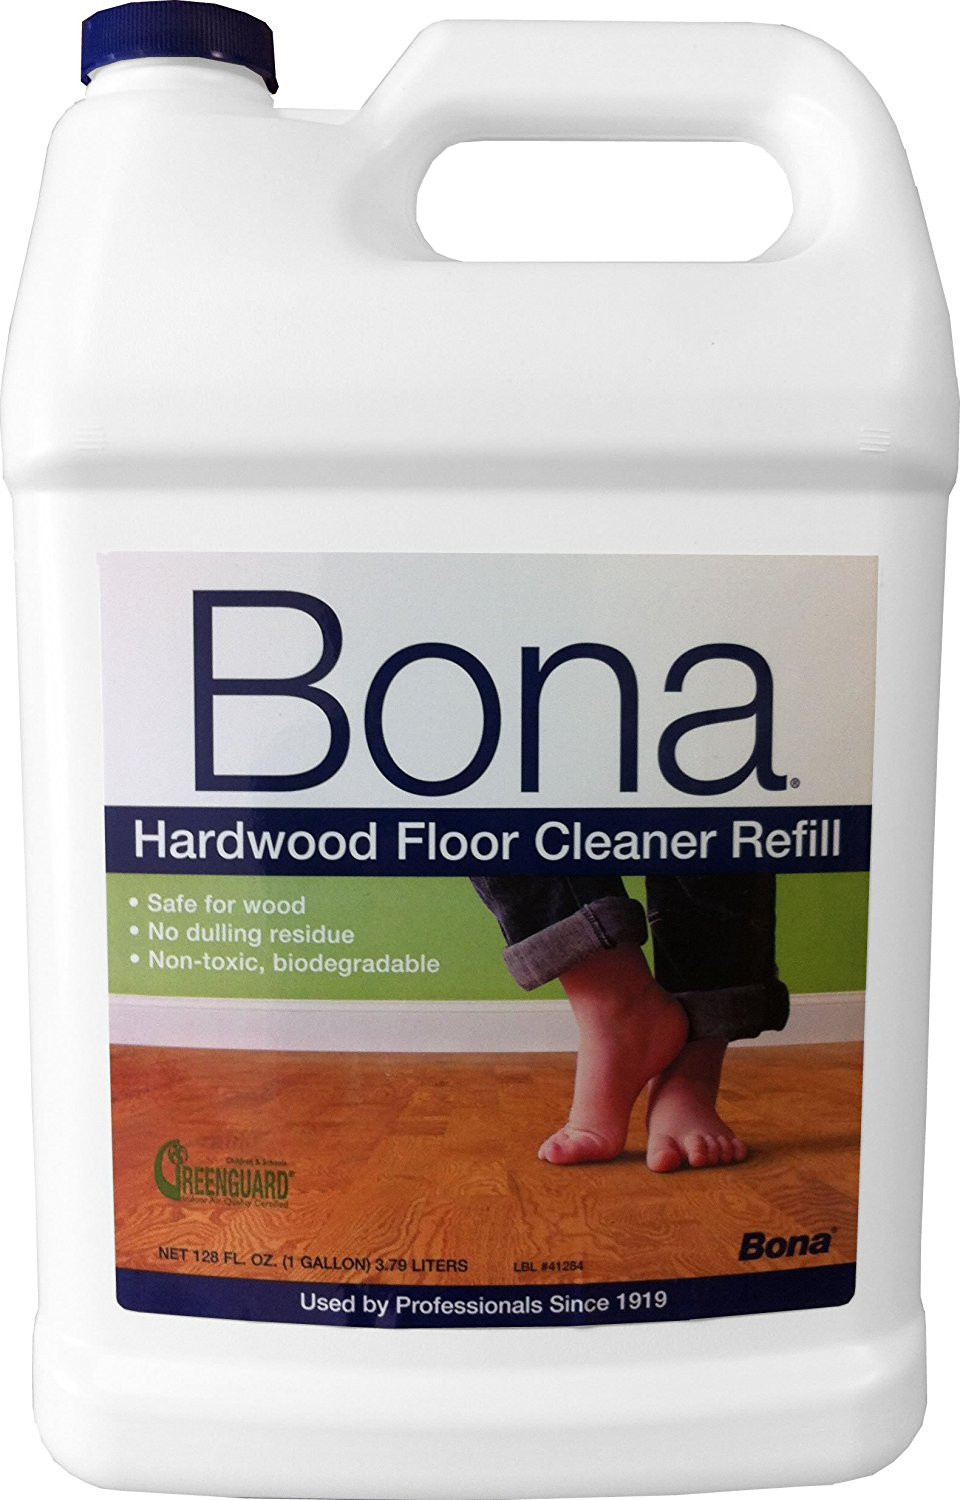 Bona Hardwood Floor Cleaner On Laminate Of Bona Hardwood Floor Cleaner Refill 128 Ounce 735346408844 Ebay within Main Image